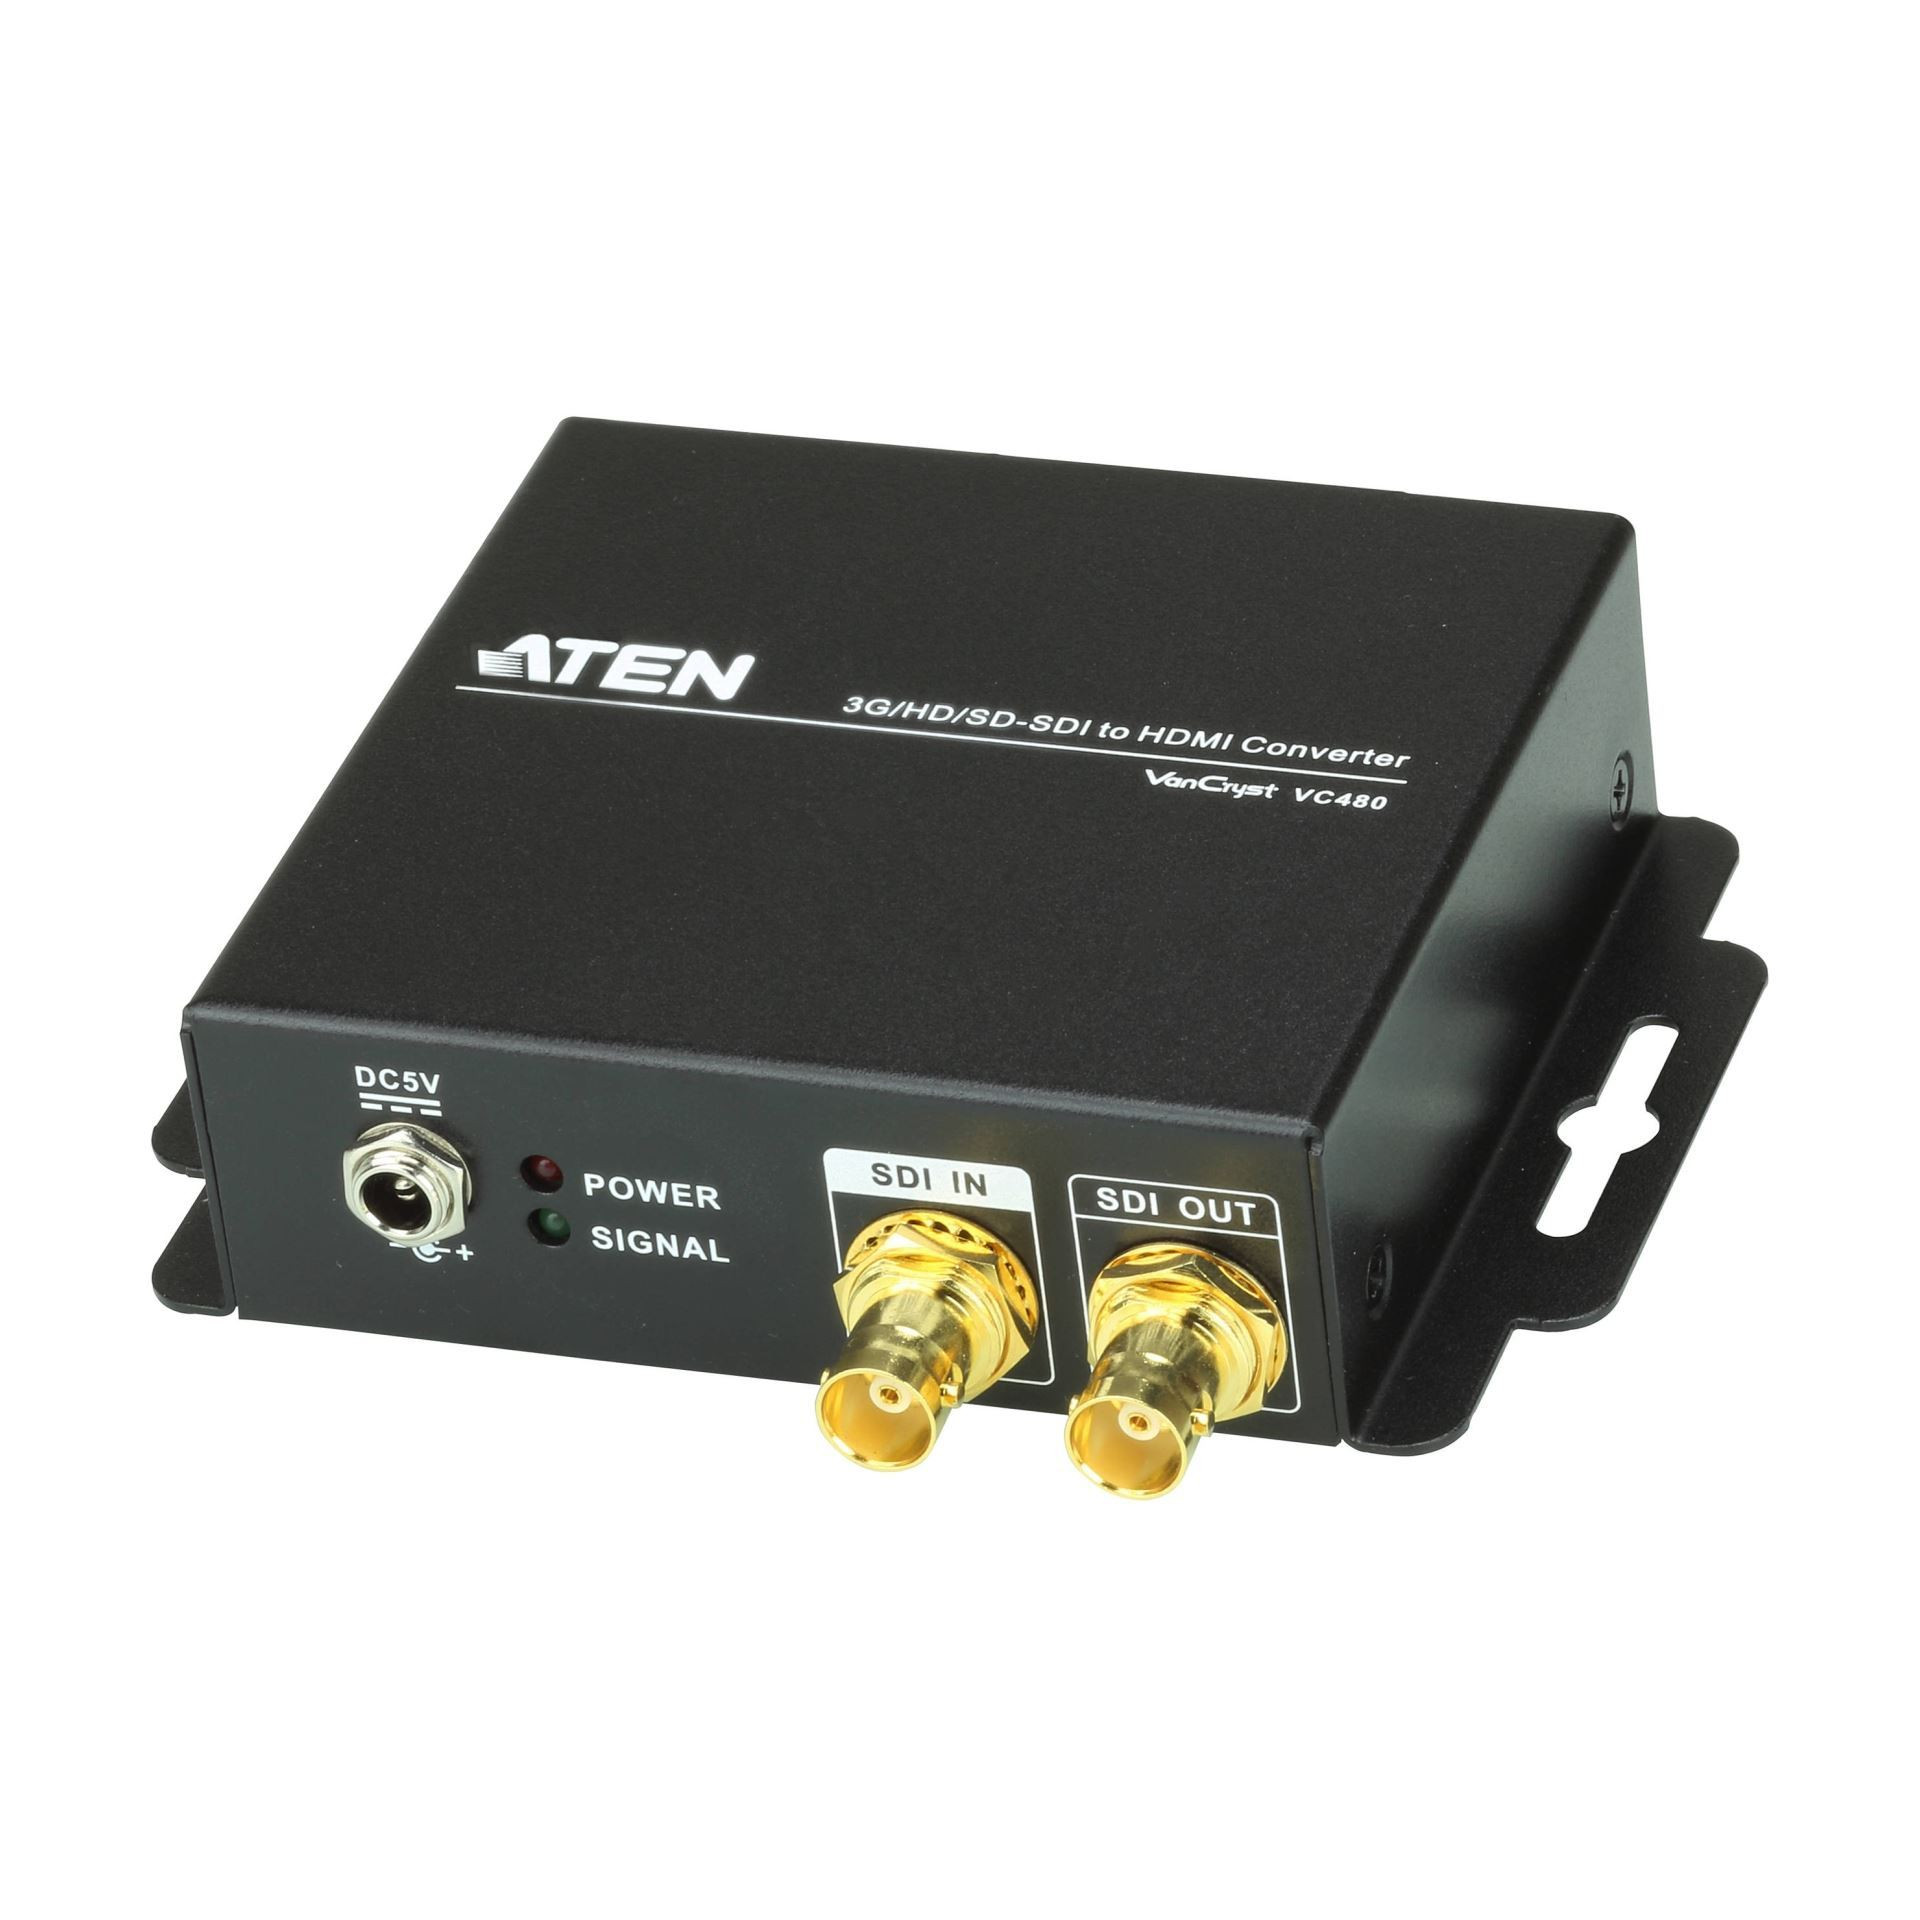 Pretvornik 3G-SDI - HDMI + Avdio VC480 Aten